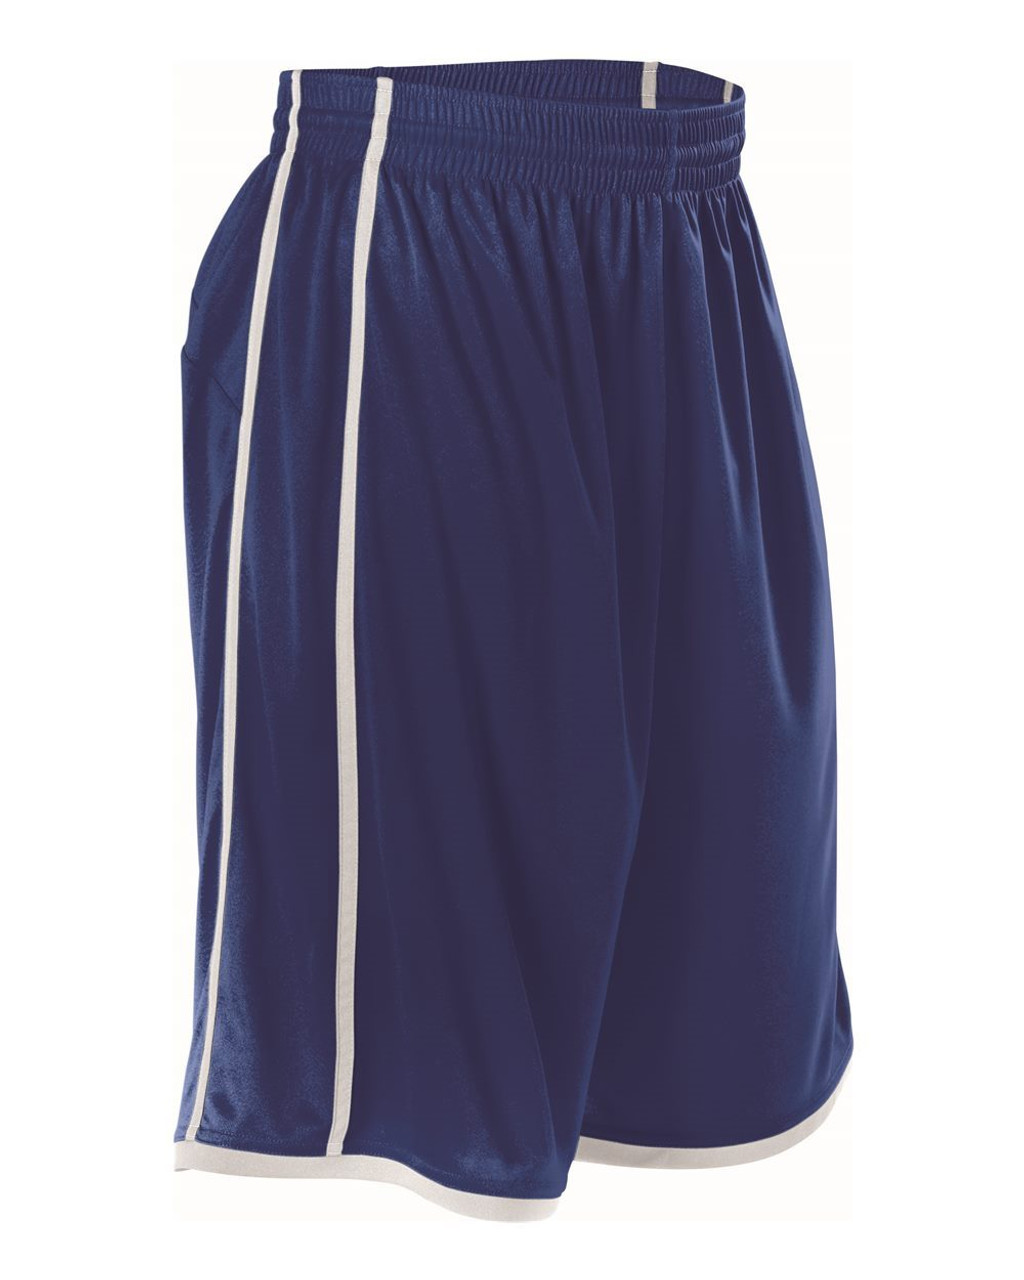 Custom Women's Basketball Shorts - 535PW